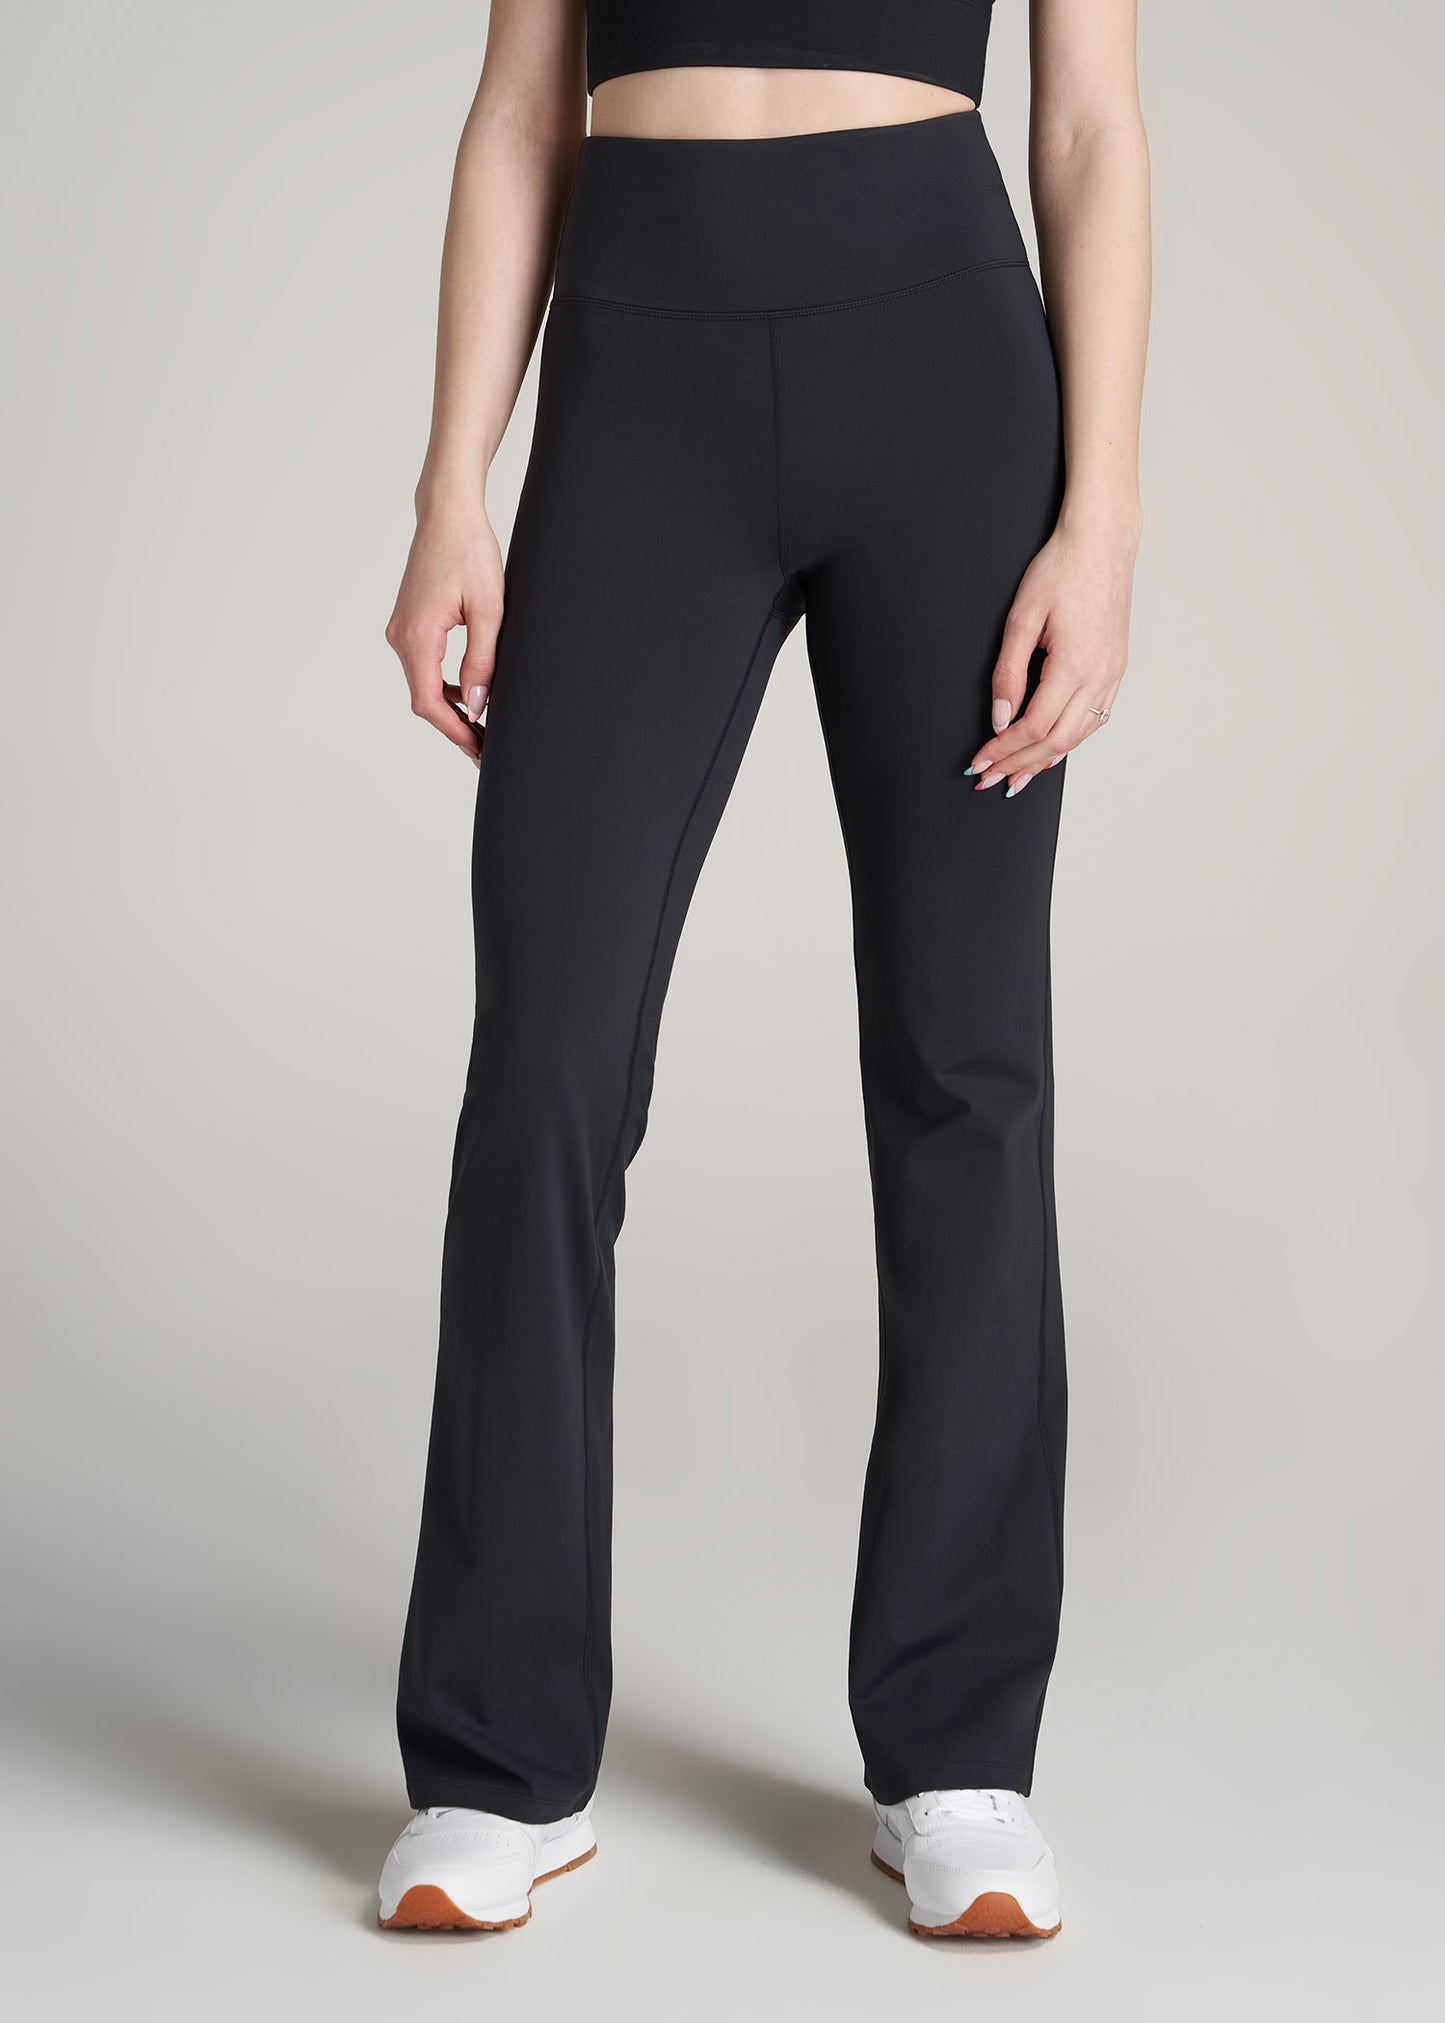 Buy Safort Inseam Regular Tall Bootcut Yoga Pants 4 Pockets online   Topofstyle